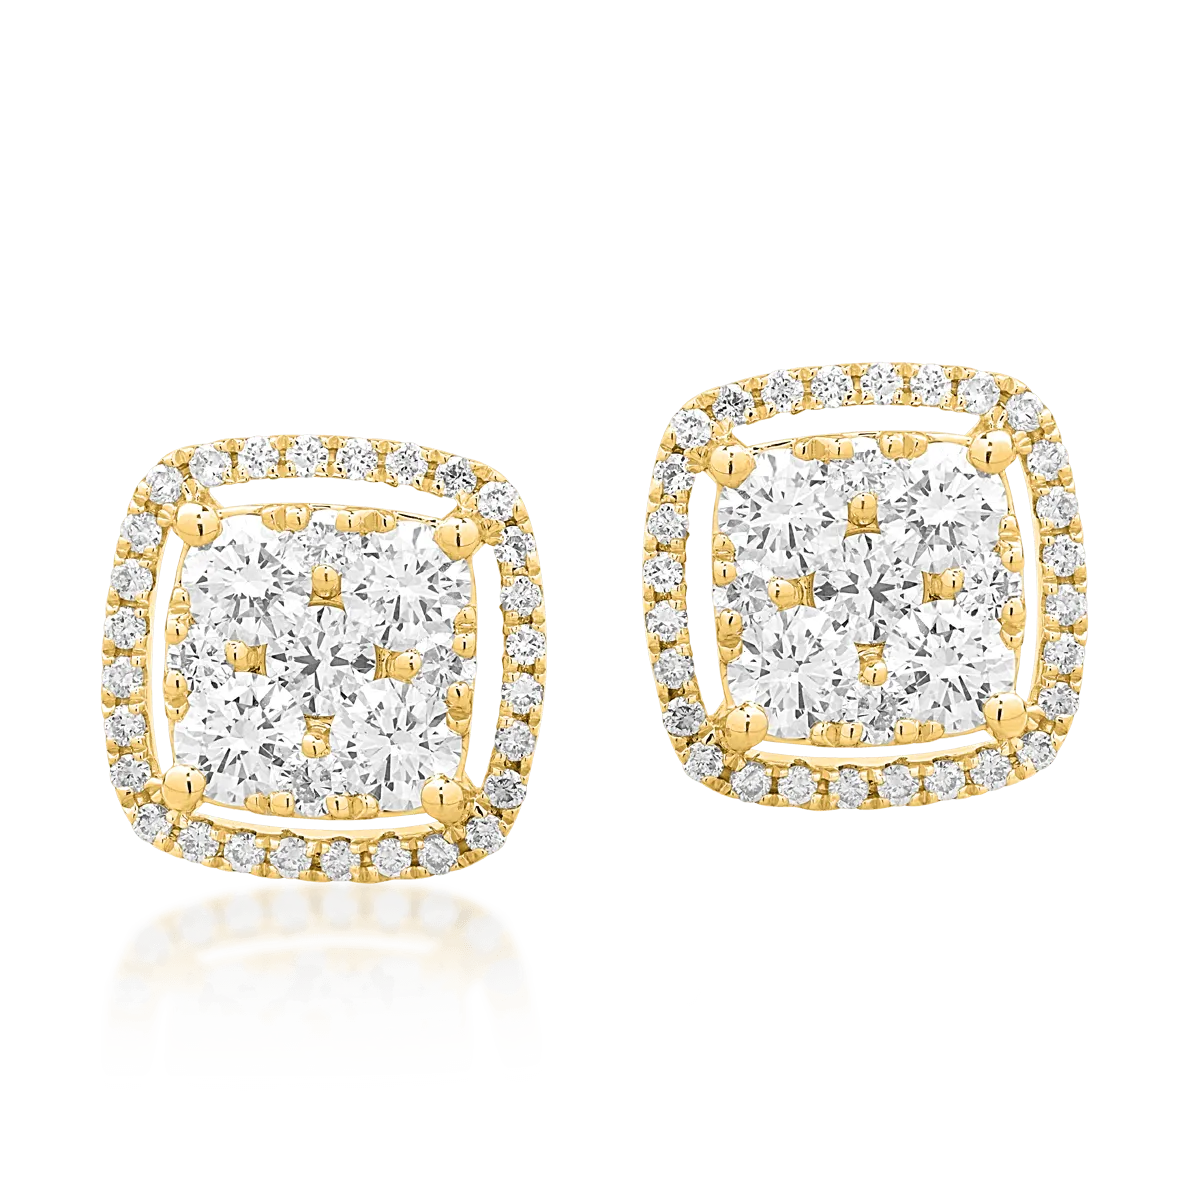 18K yellow gold earrings with 1ct diamonds